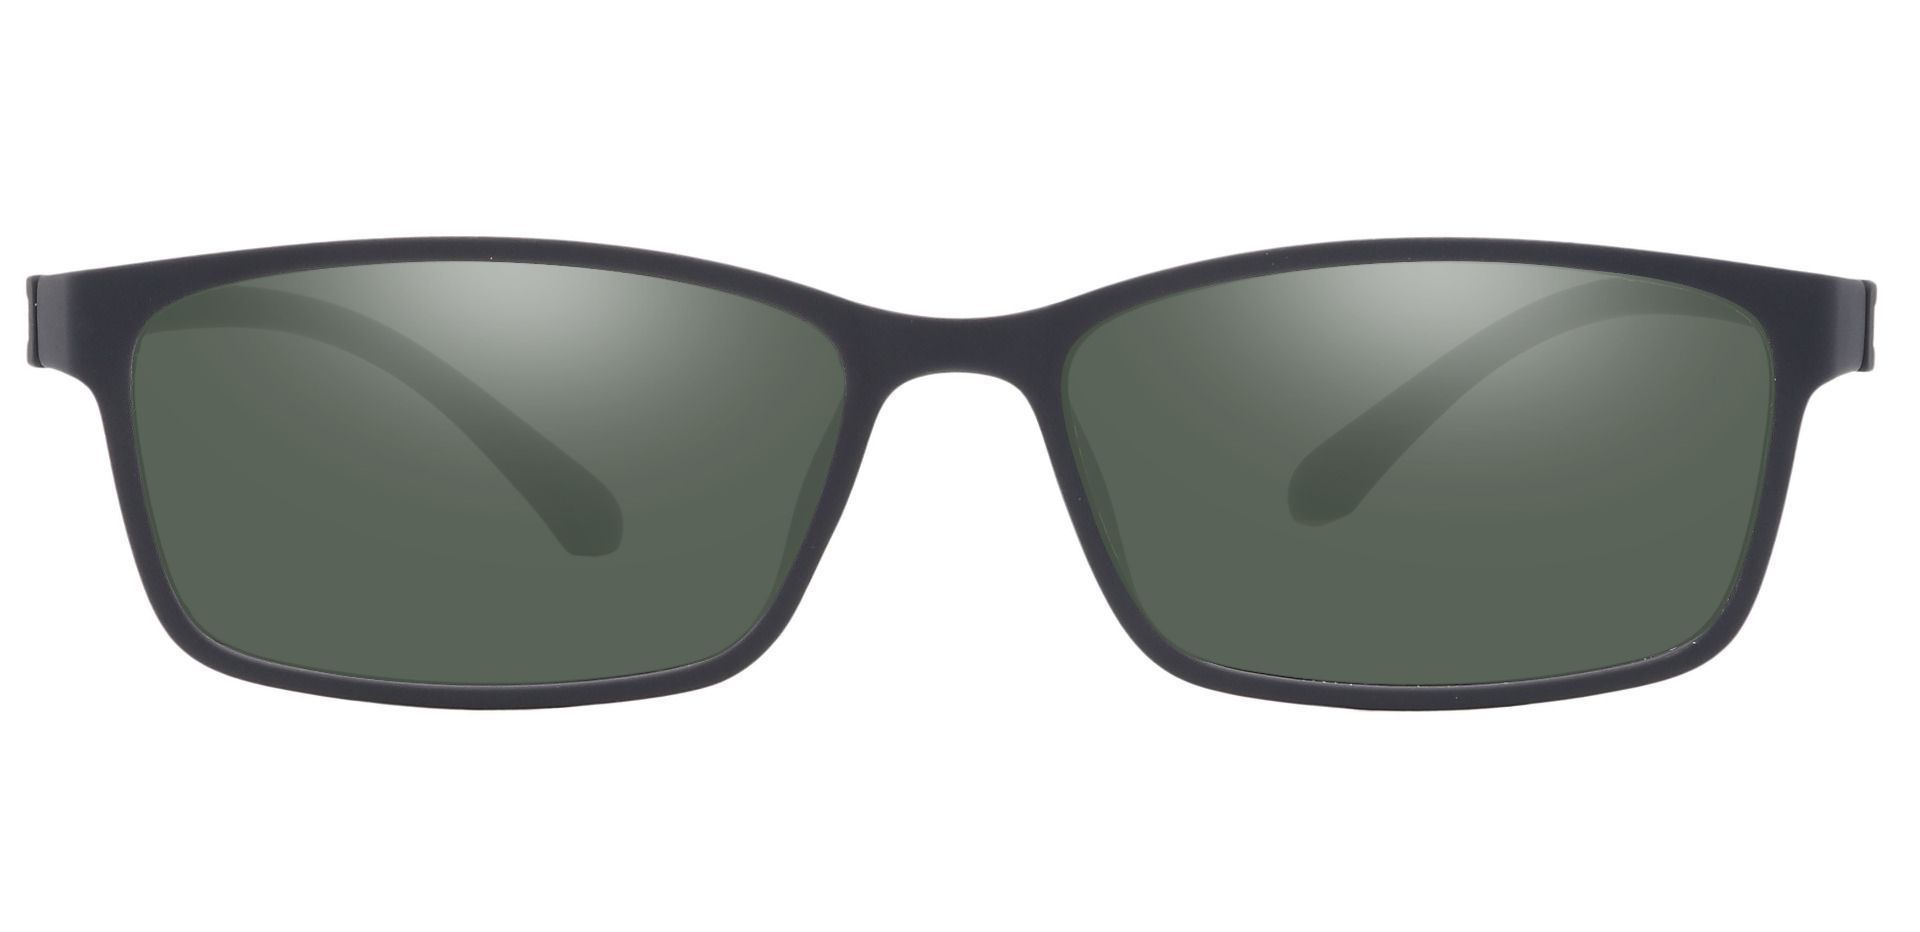 Wichita Rectangle Non-Rx Sunglasses - Black Frame With Green Lenses